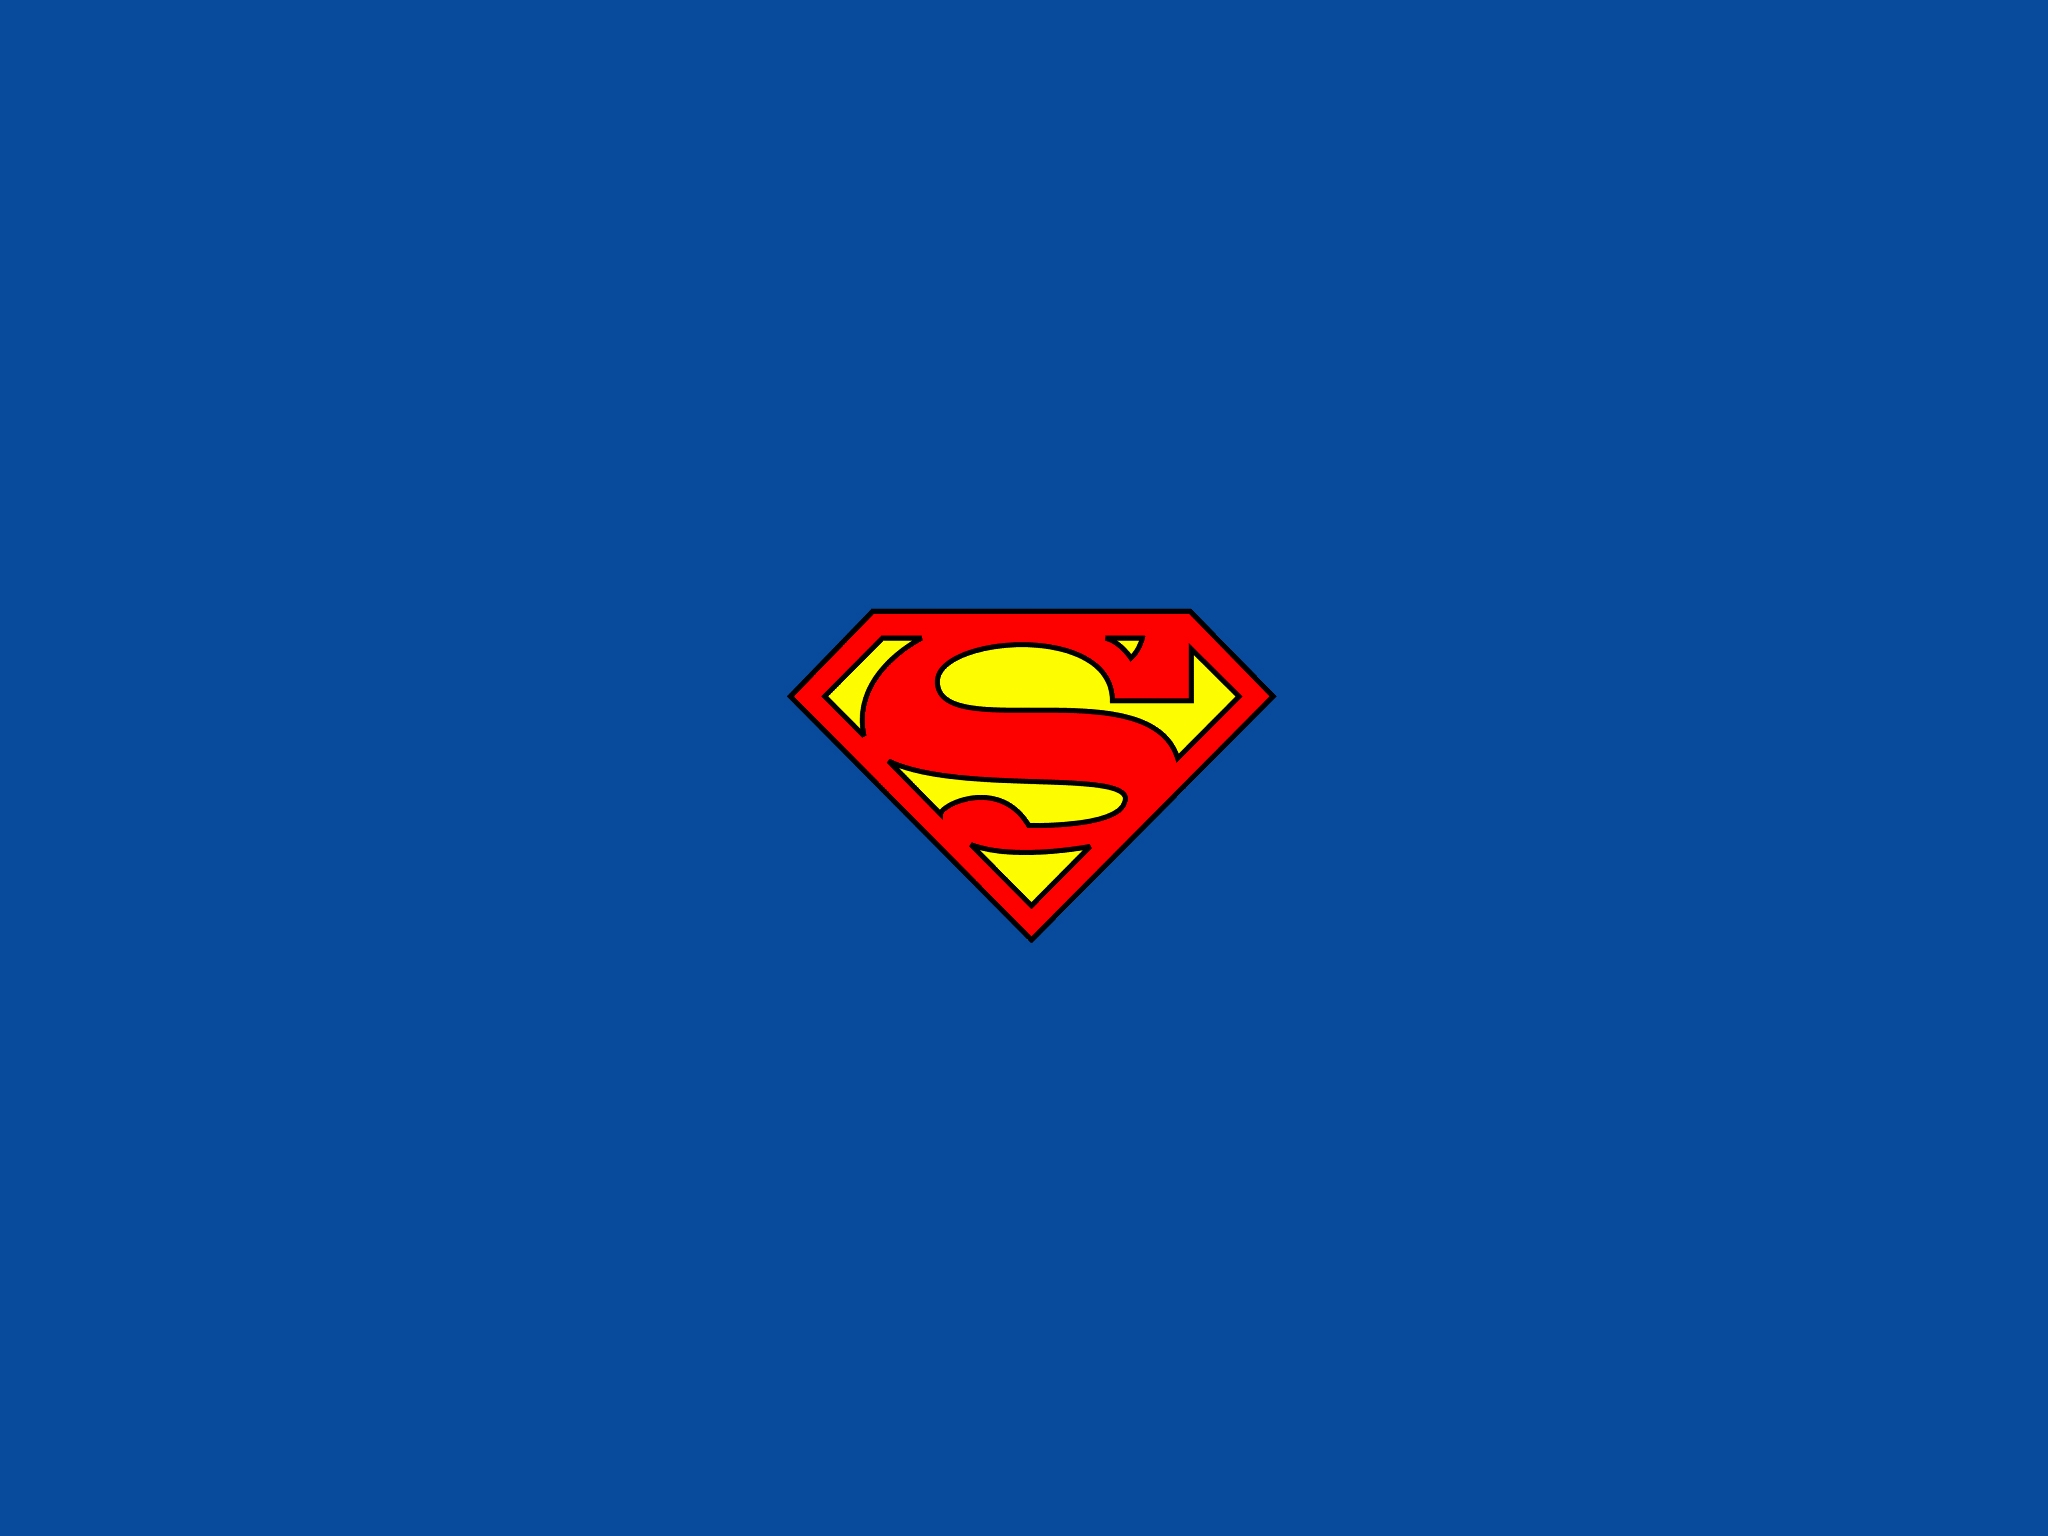 Superman Logo Wallpaper For iPad Flickr - Photo Sharing